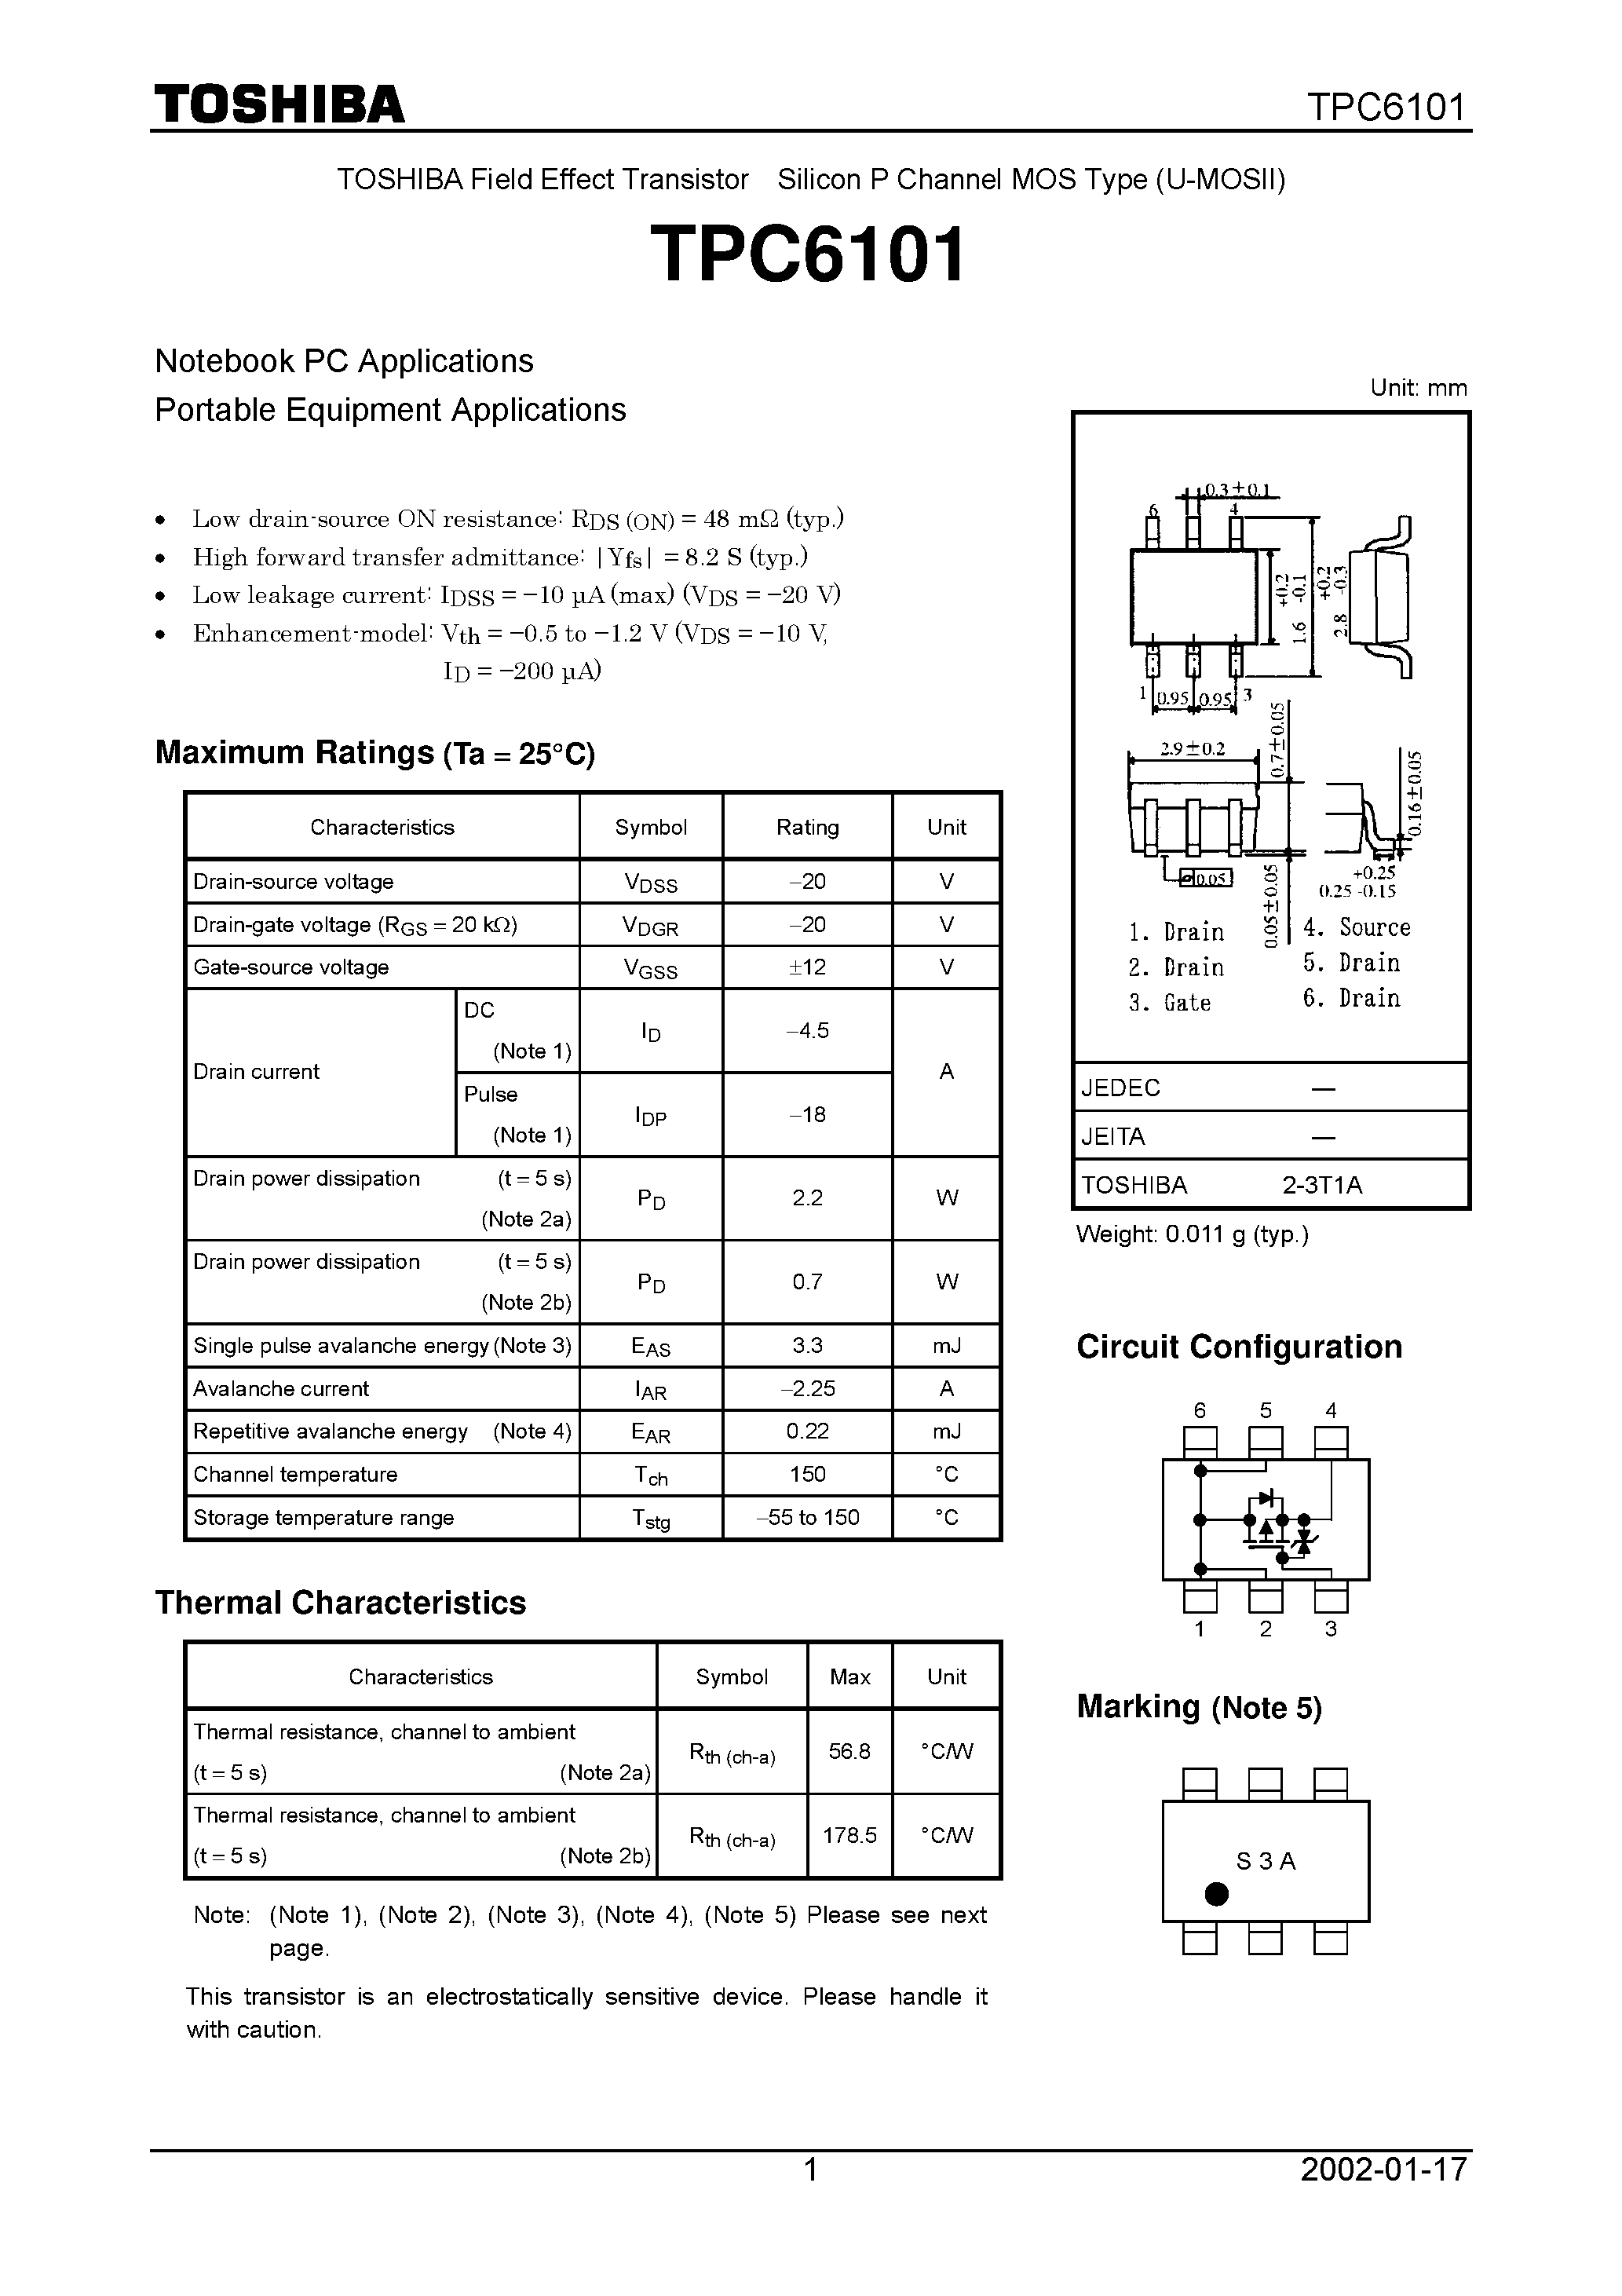 Datasheet TPC6101 - TOSHIBA Field Effect Transistor Silicon P Channel MOS Type (U-MOSII) page 1